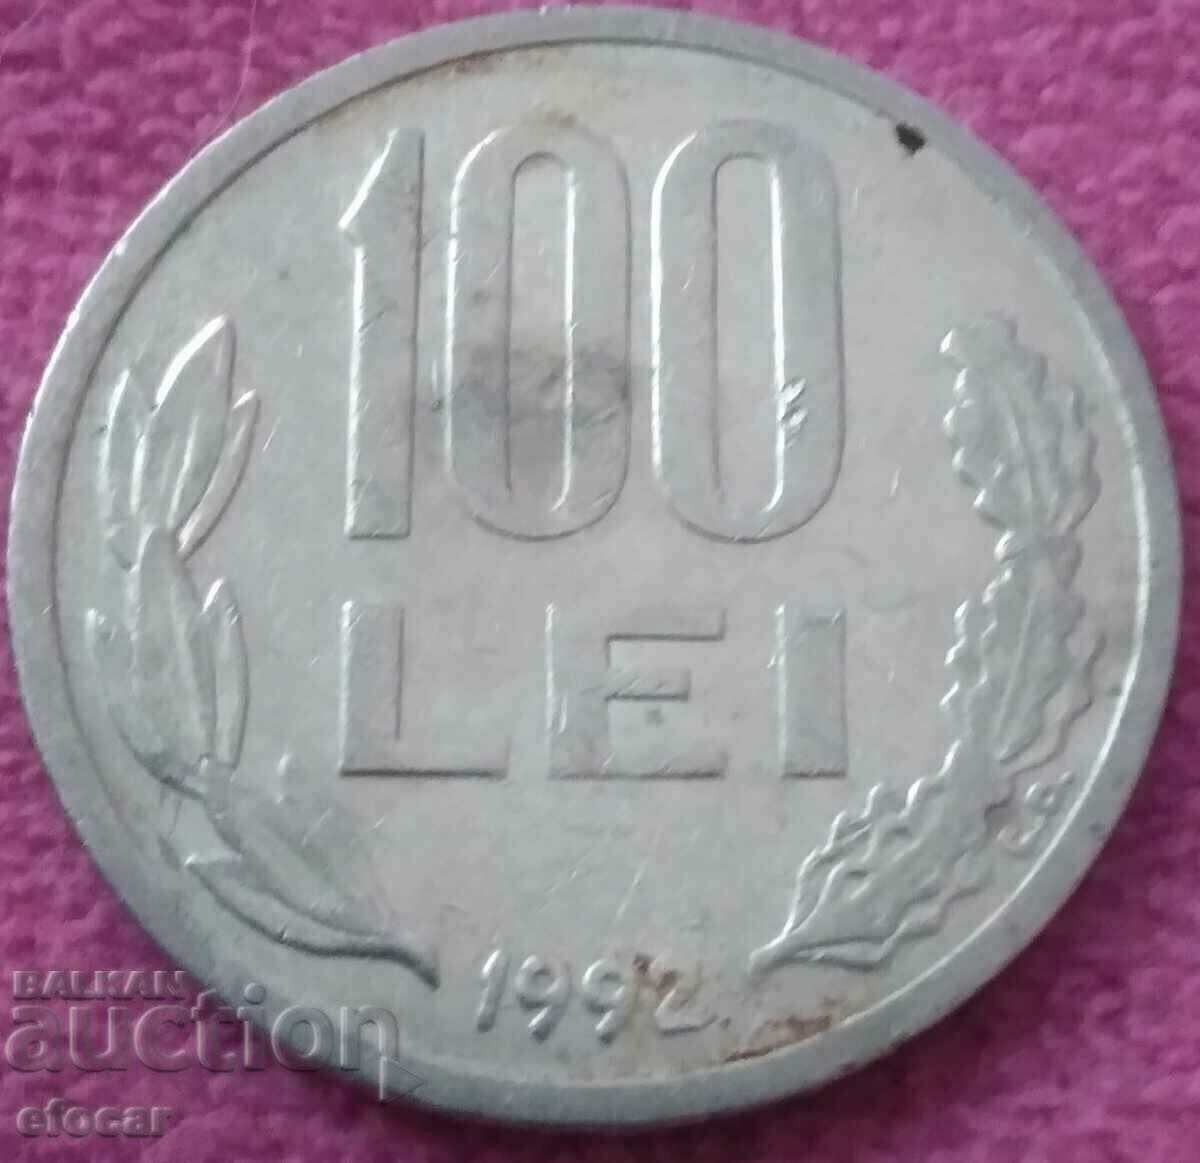 100 lei Romania 1992 incep de la 0.01